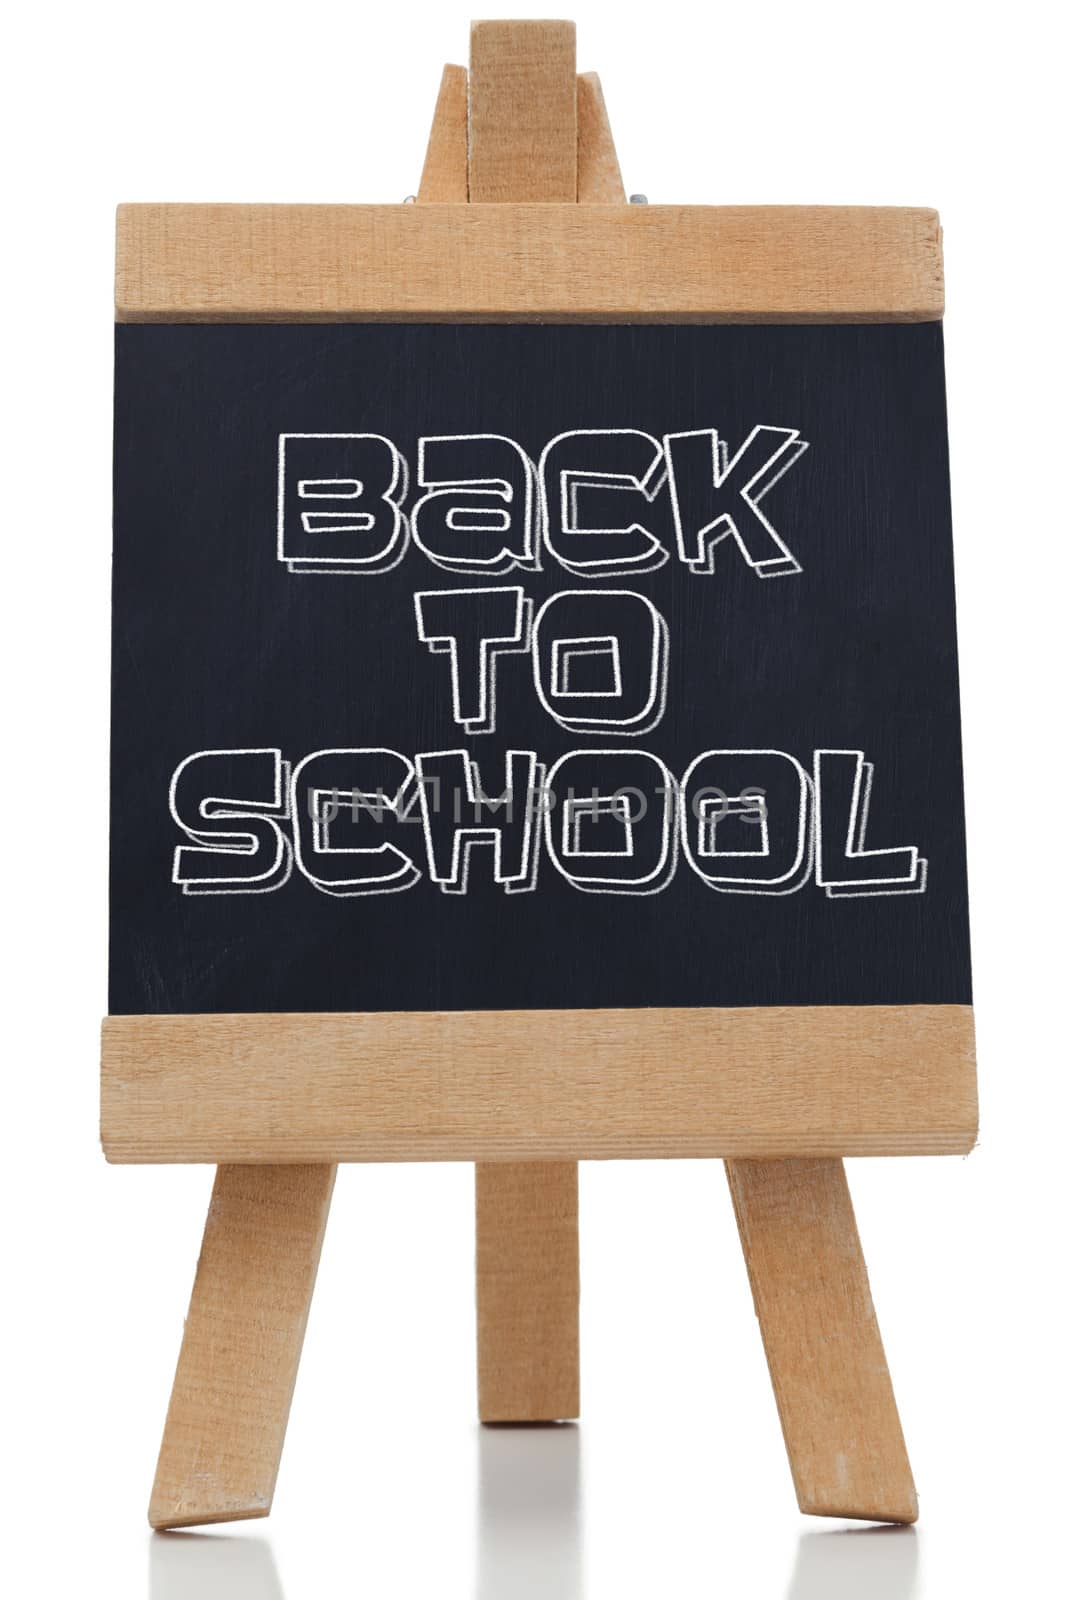 Back to school written in black on chalkboard against white background